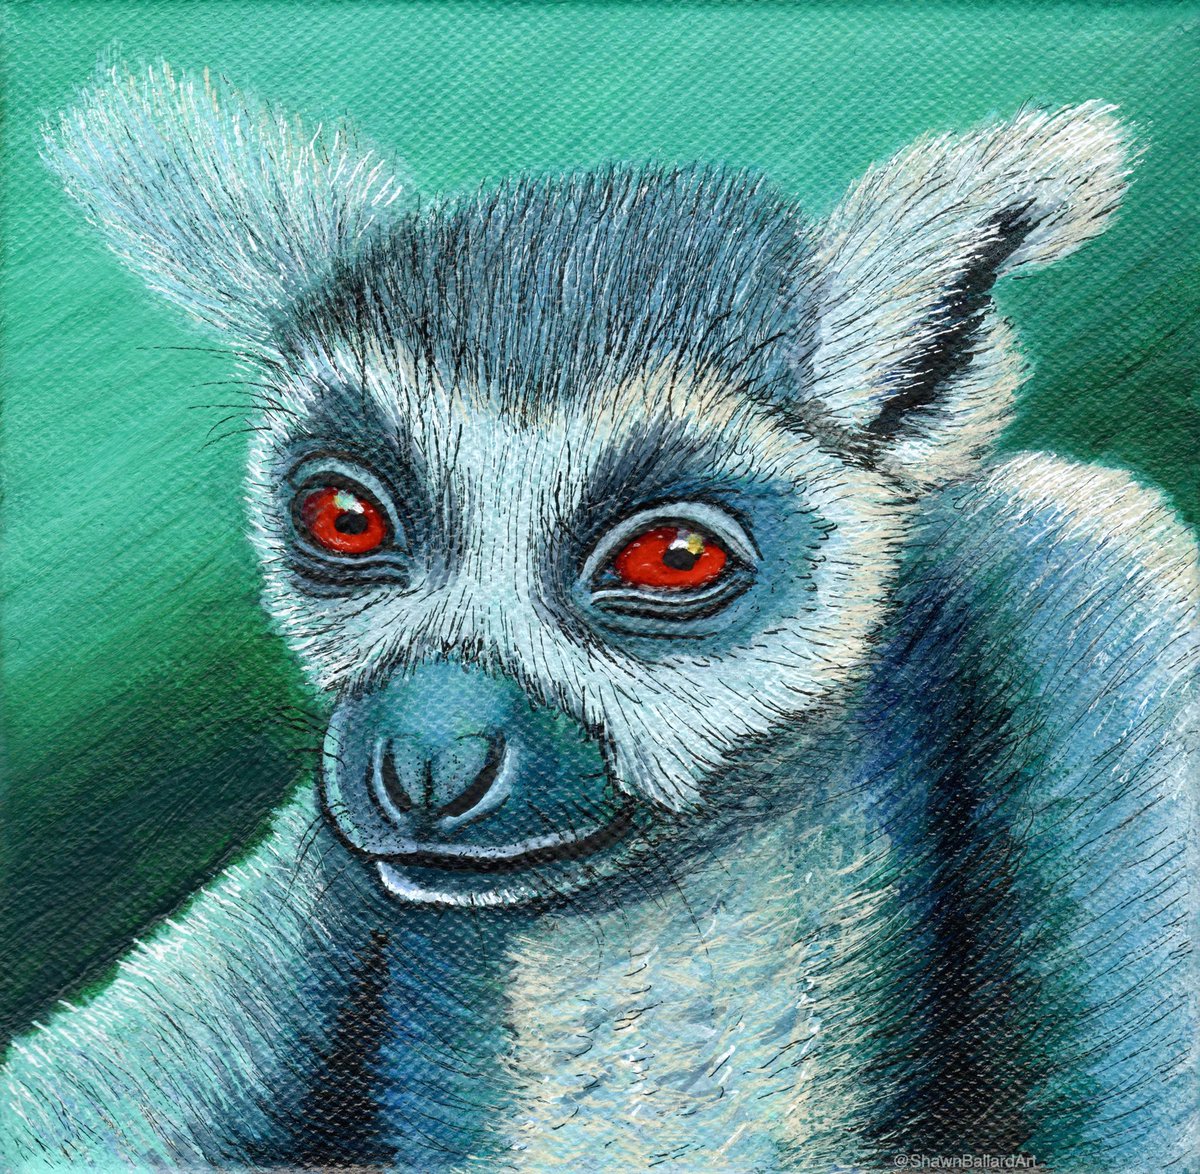 Ringtail Lemur Portrait 
Oil, Acrylic & Ink on Canvas 6”x6”
For Sale - Free US Shipping

#STLMade #lemur #ringtailedlemur #ringtailedlemurart #lemurpainting #ringtailedlemurpainting #lemurart